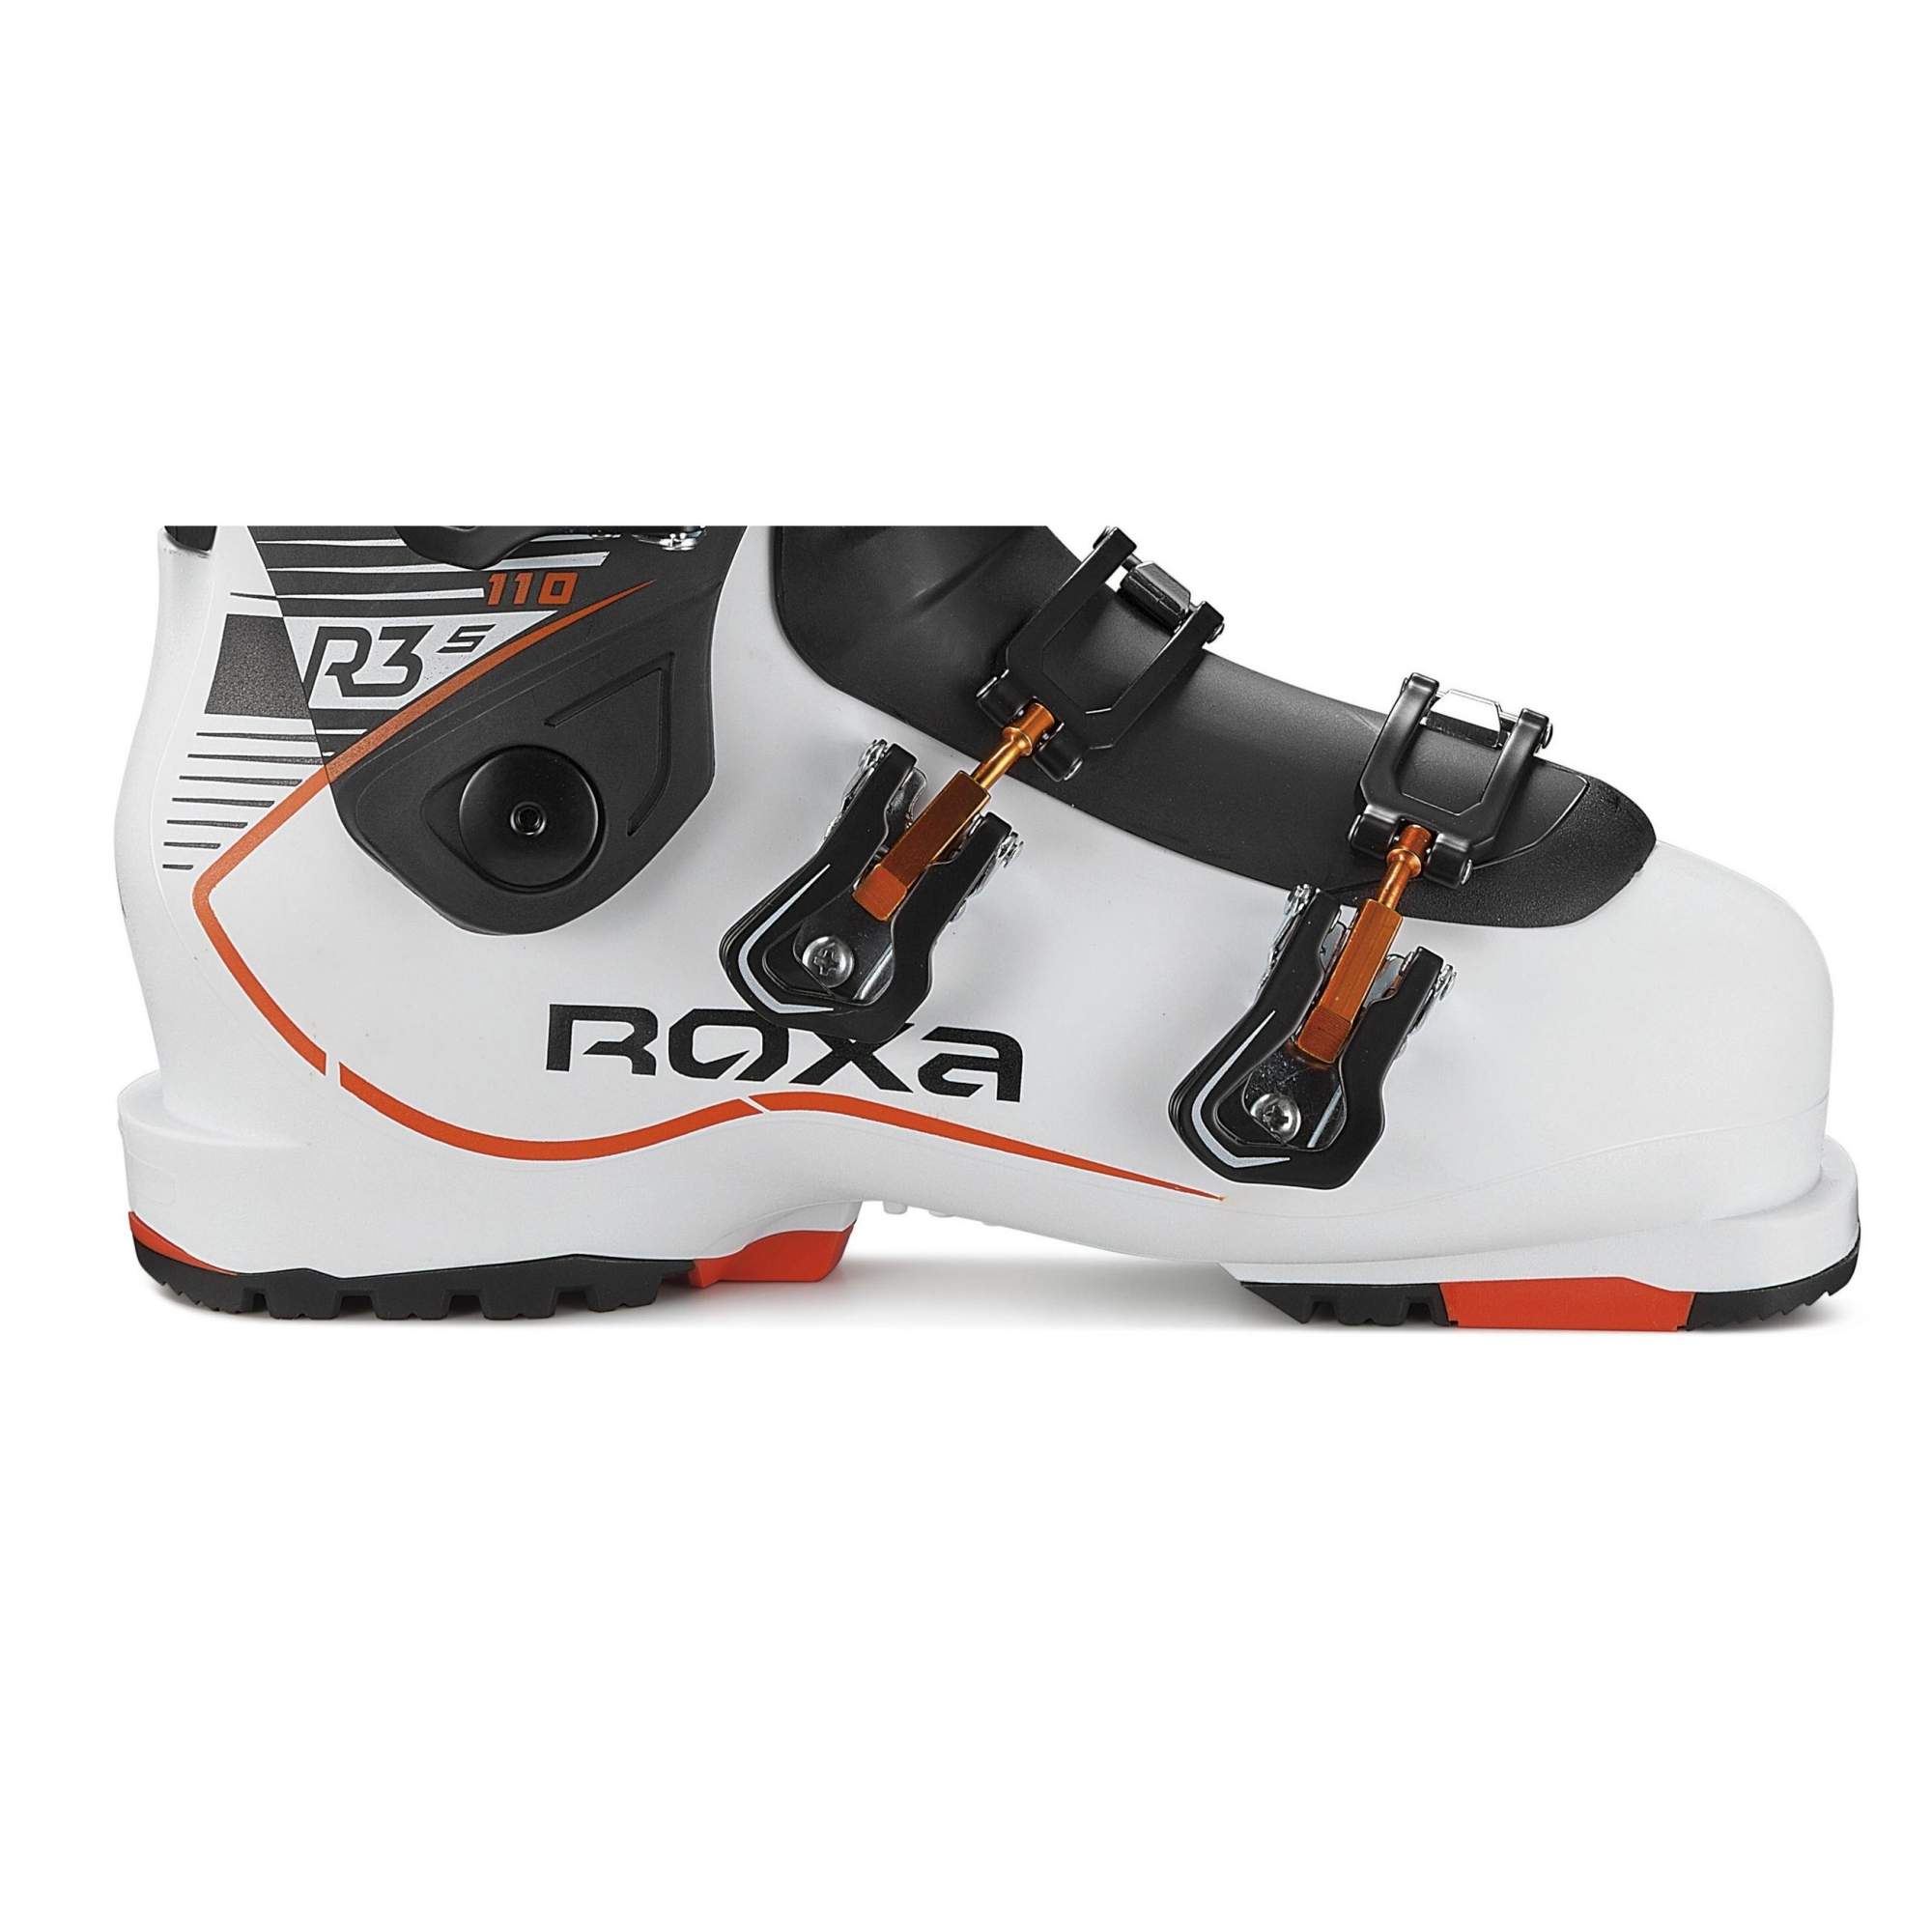 Горнолыжные Ботинки Roxa 2018-19 R3S 110 White/Black/Black (См:29,5)